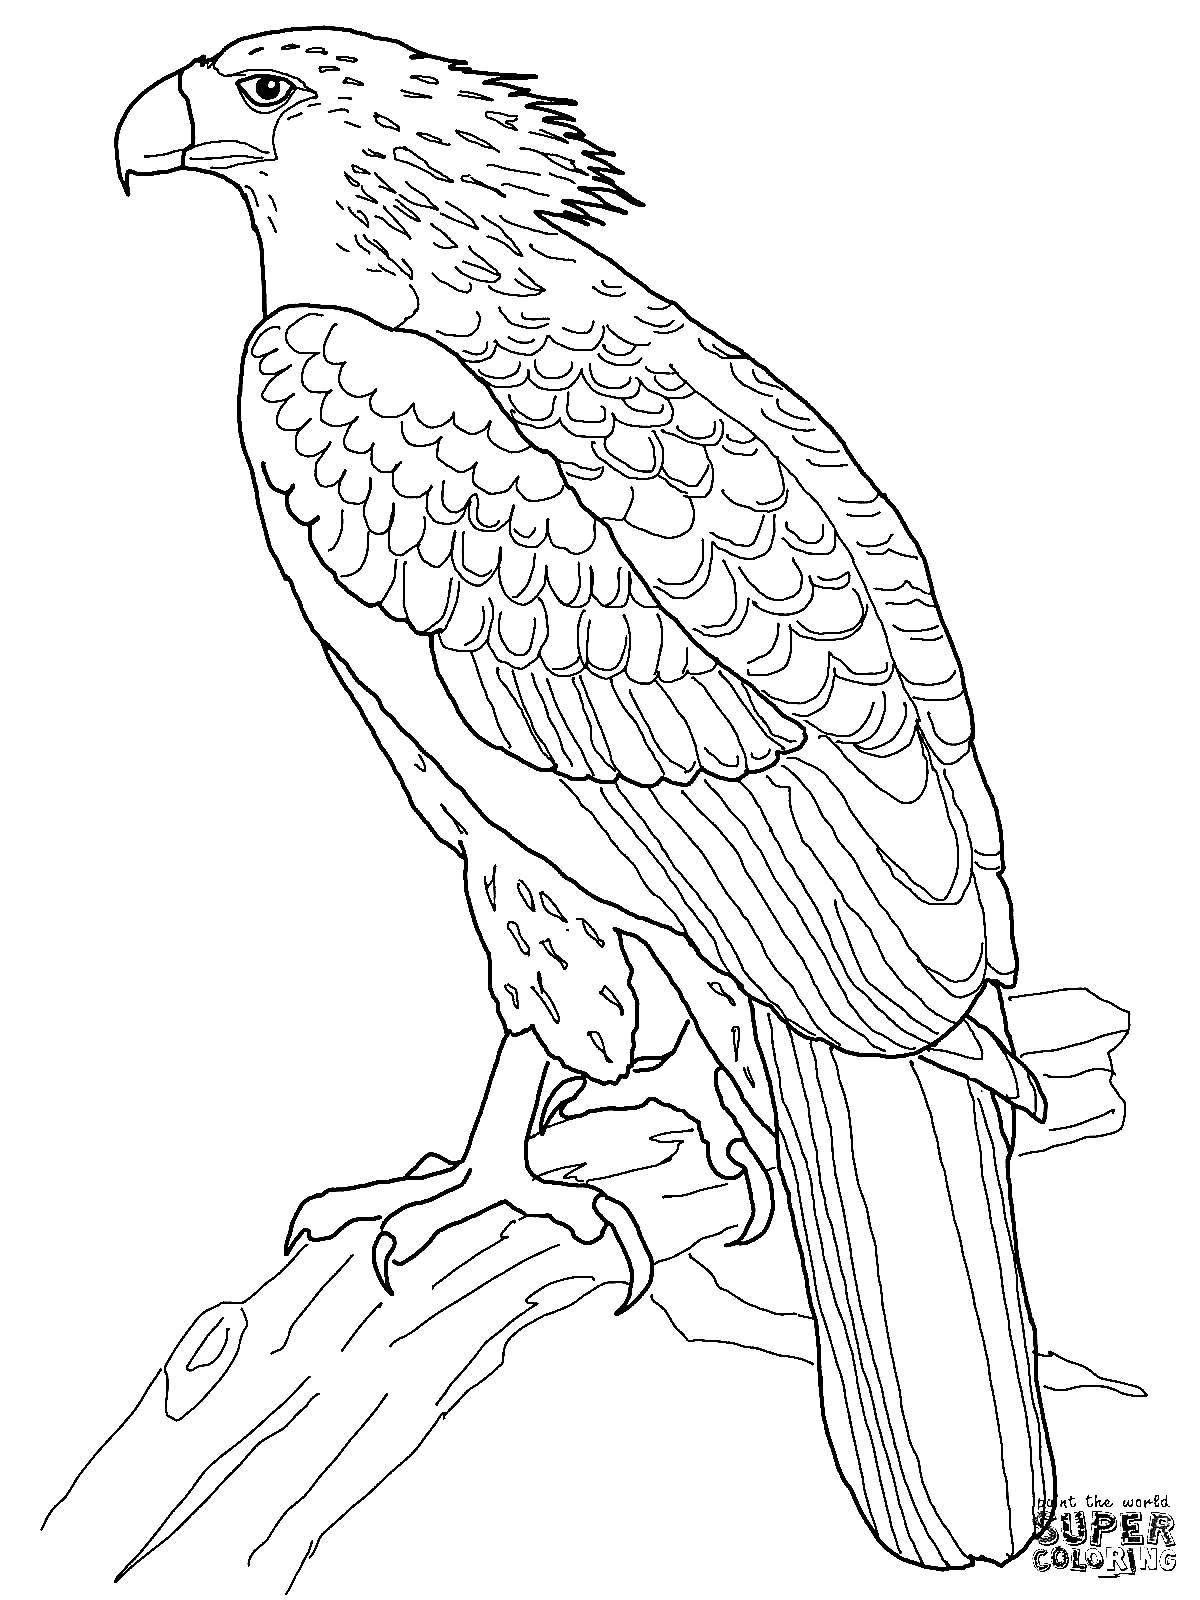 Coloring book shining eagle